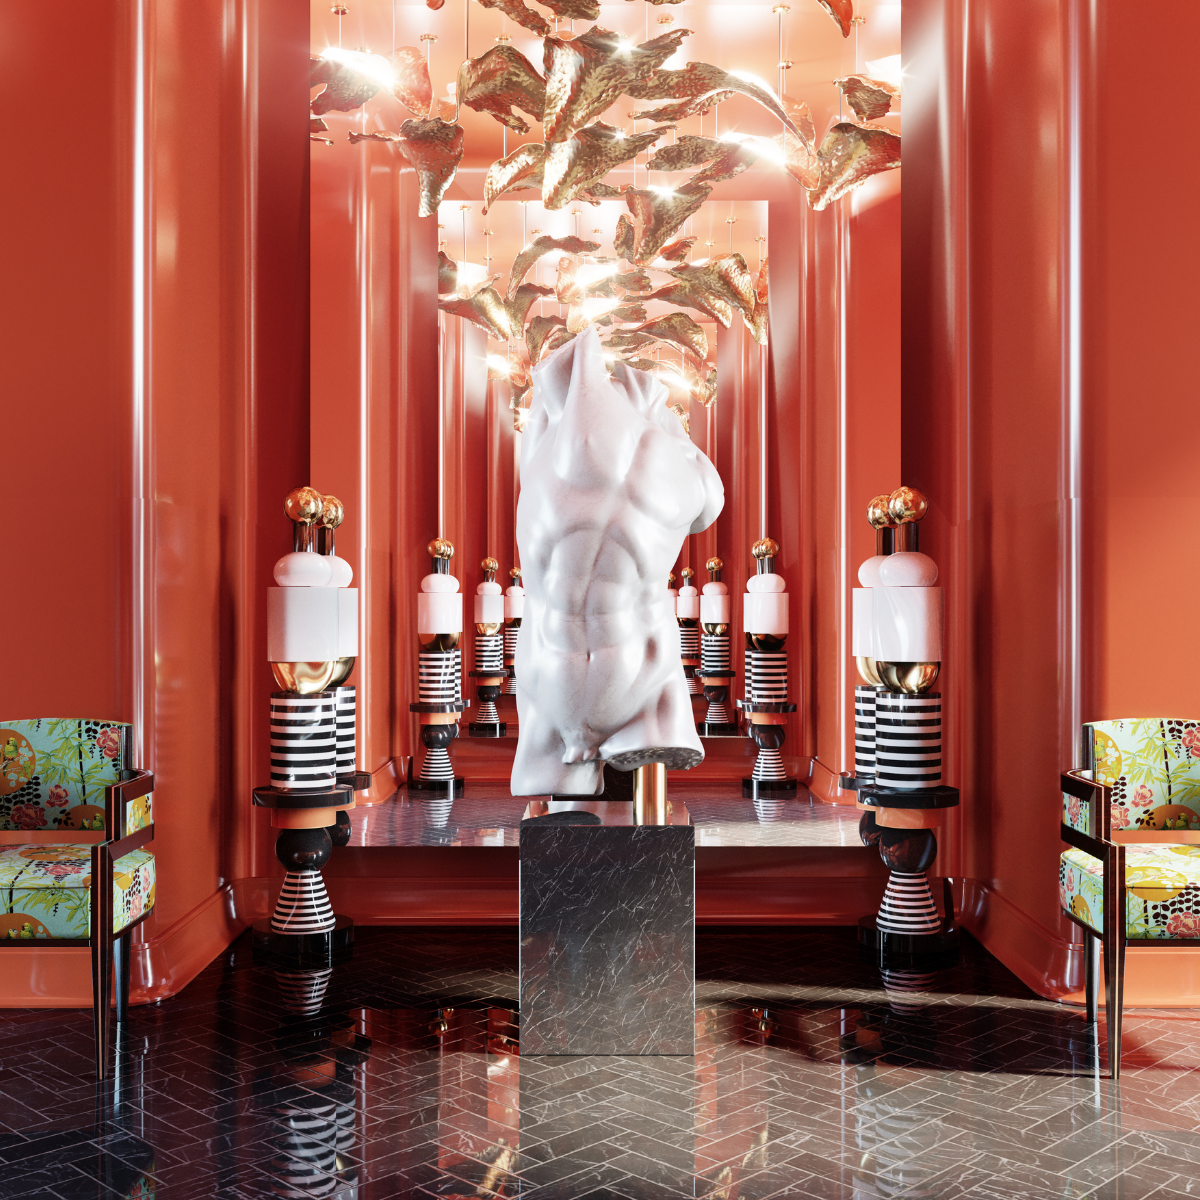 Yves Saint Laurent Iconic Home  – Celebrating Art and Design